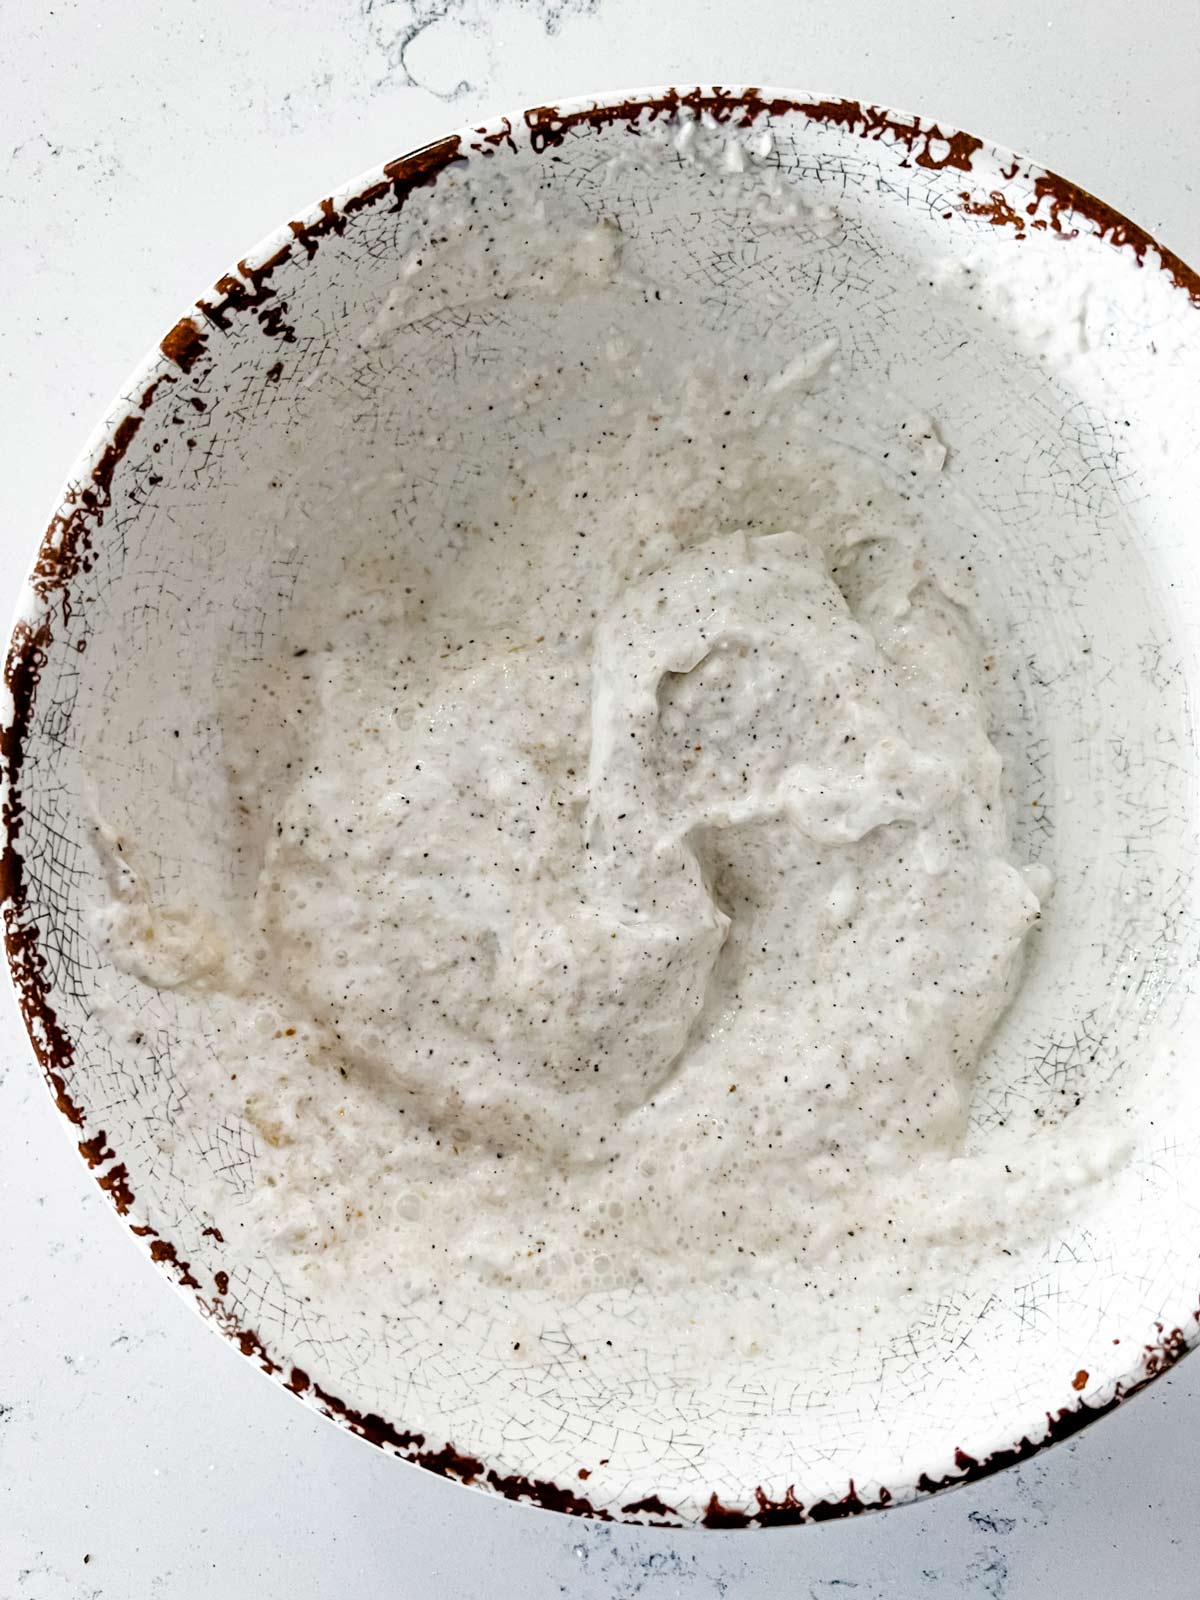 Horseradish cream in a rustic white bowl.